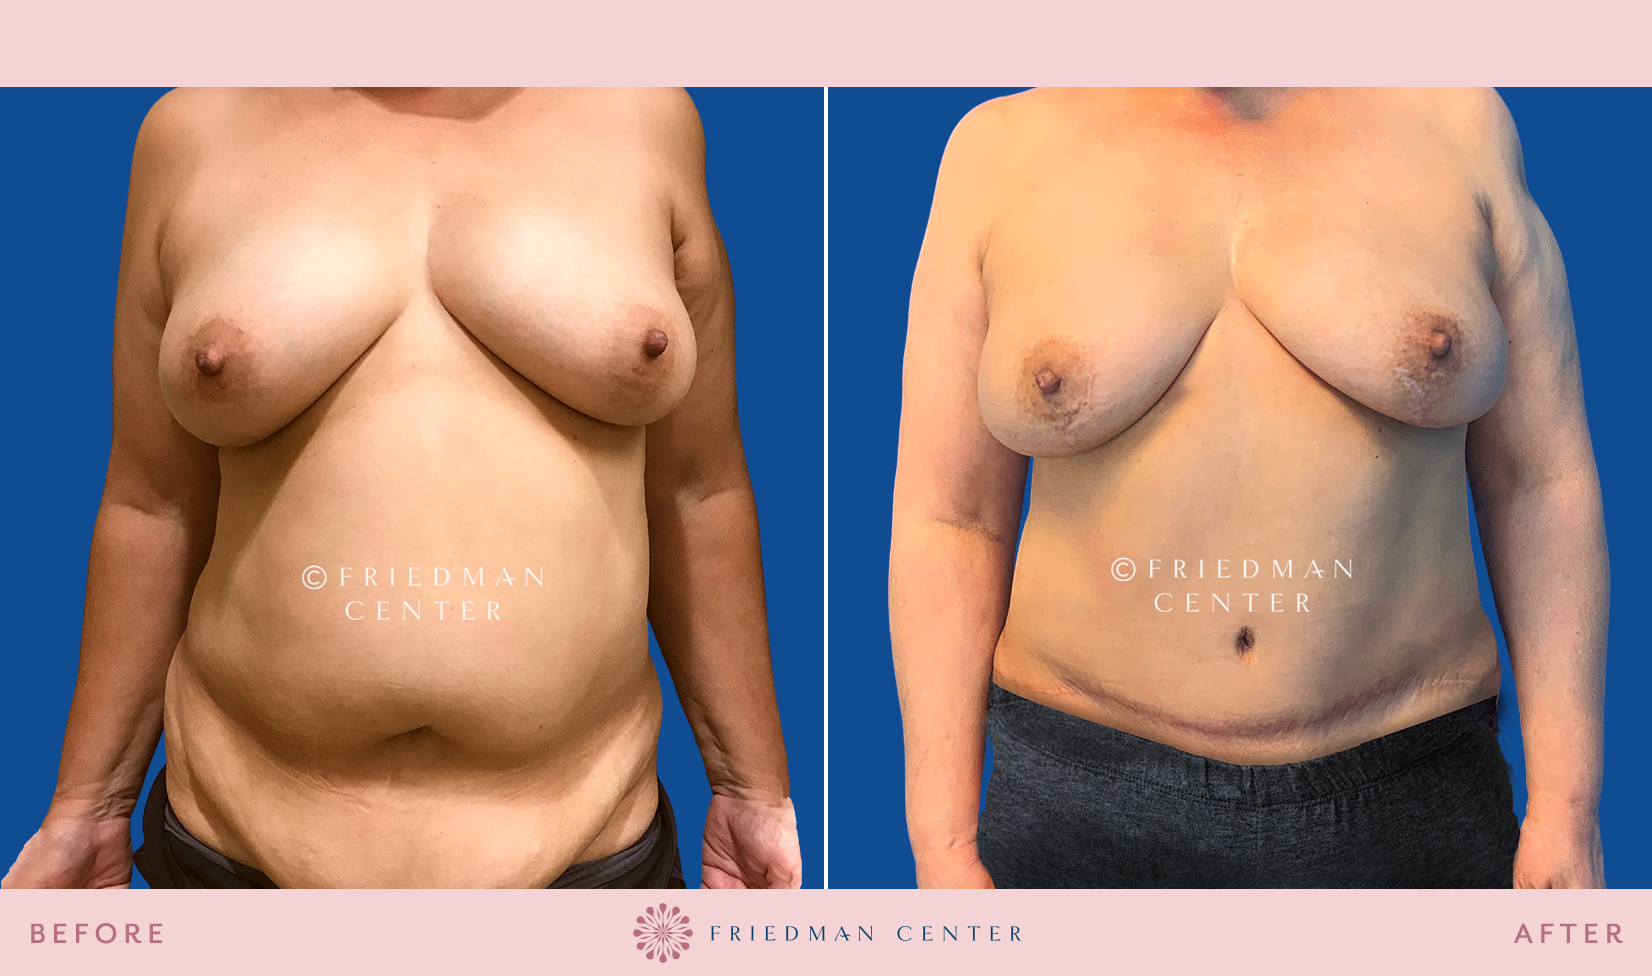 Nipple-Sparing Double Mastectomy - Friedman Center